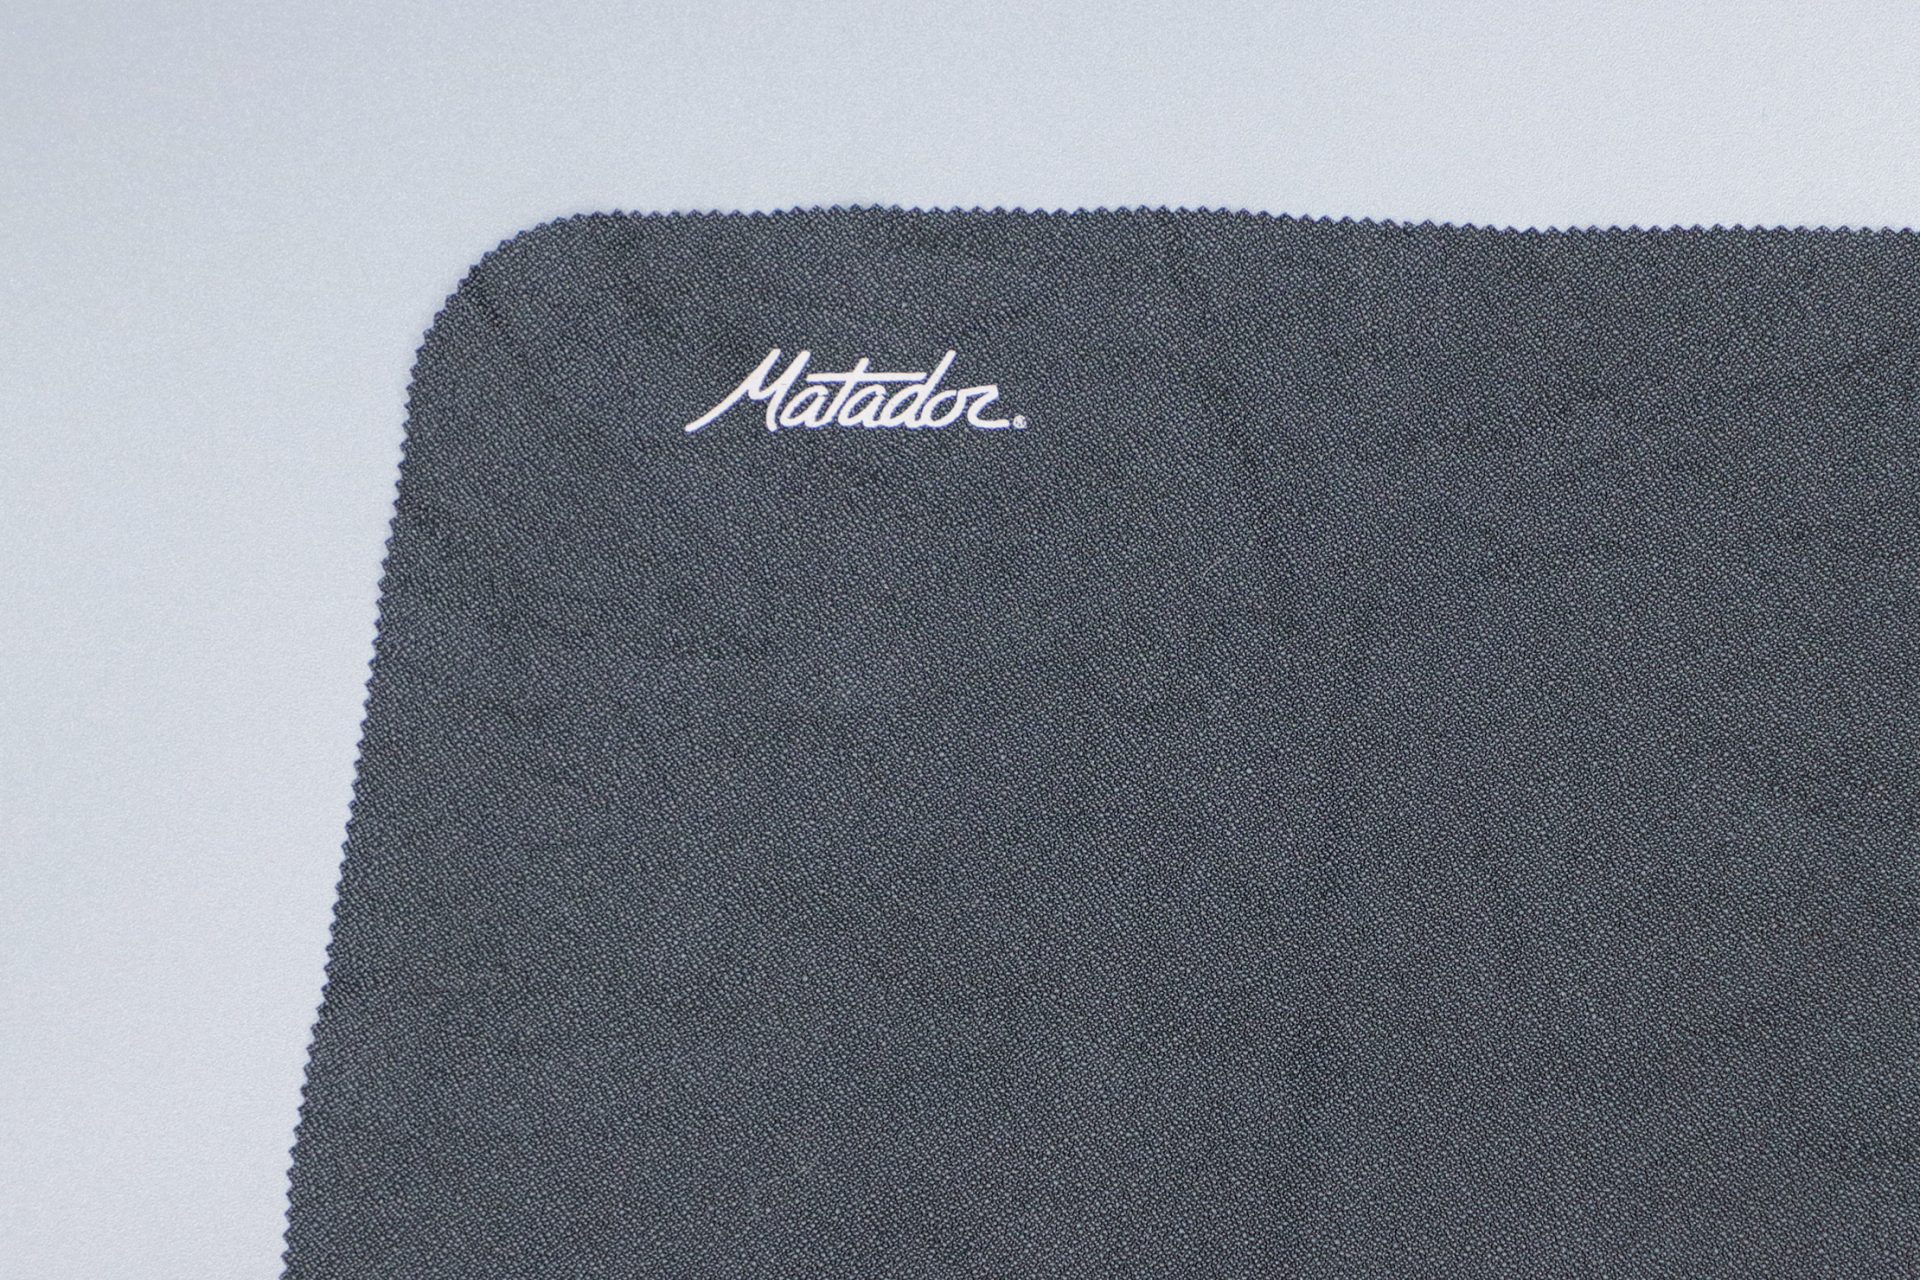 Matador Ultralight Travel Towel logo